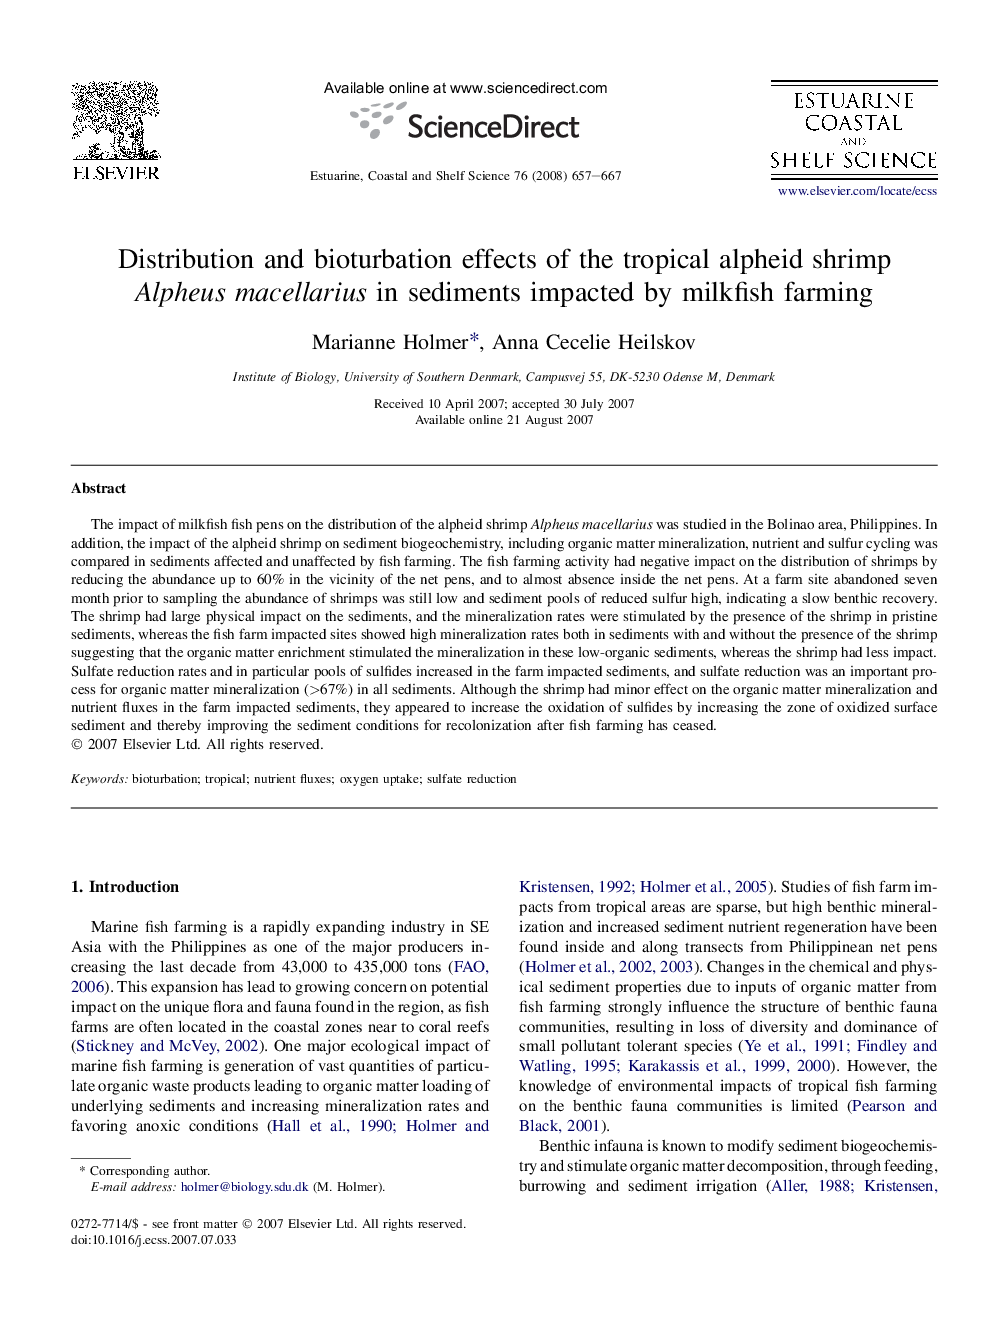 Distribution and bioturbation effects of the tropical alpheid shrimp Alpheus macellarius in sediments impacted by milkfish farming